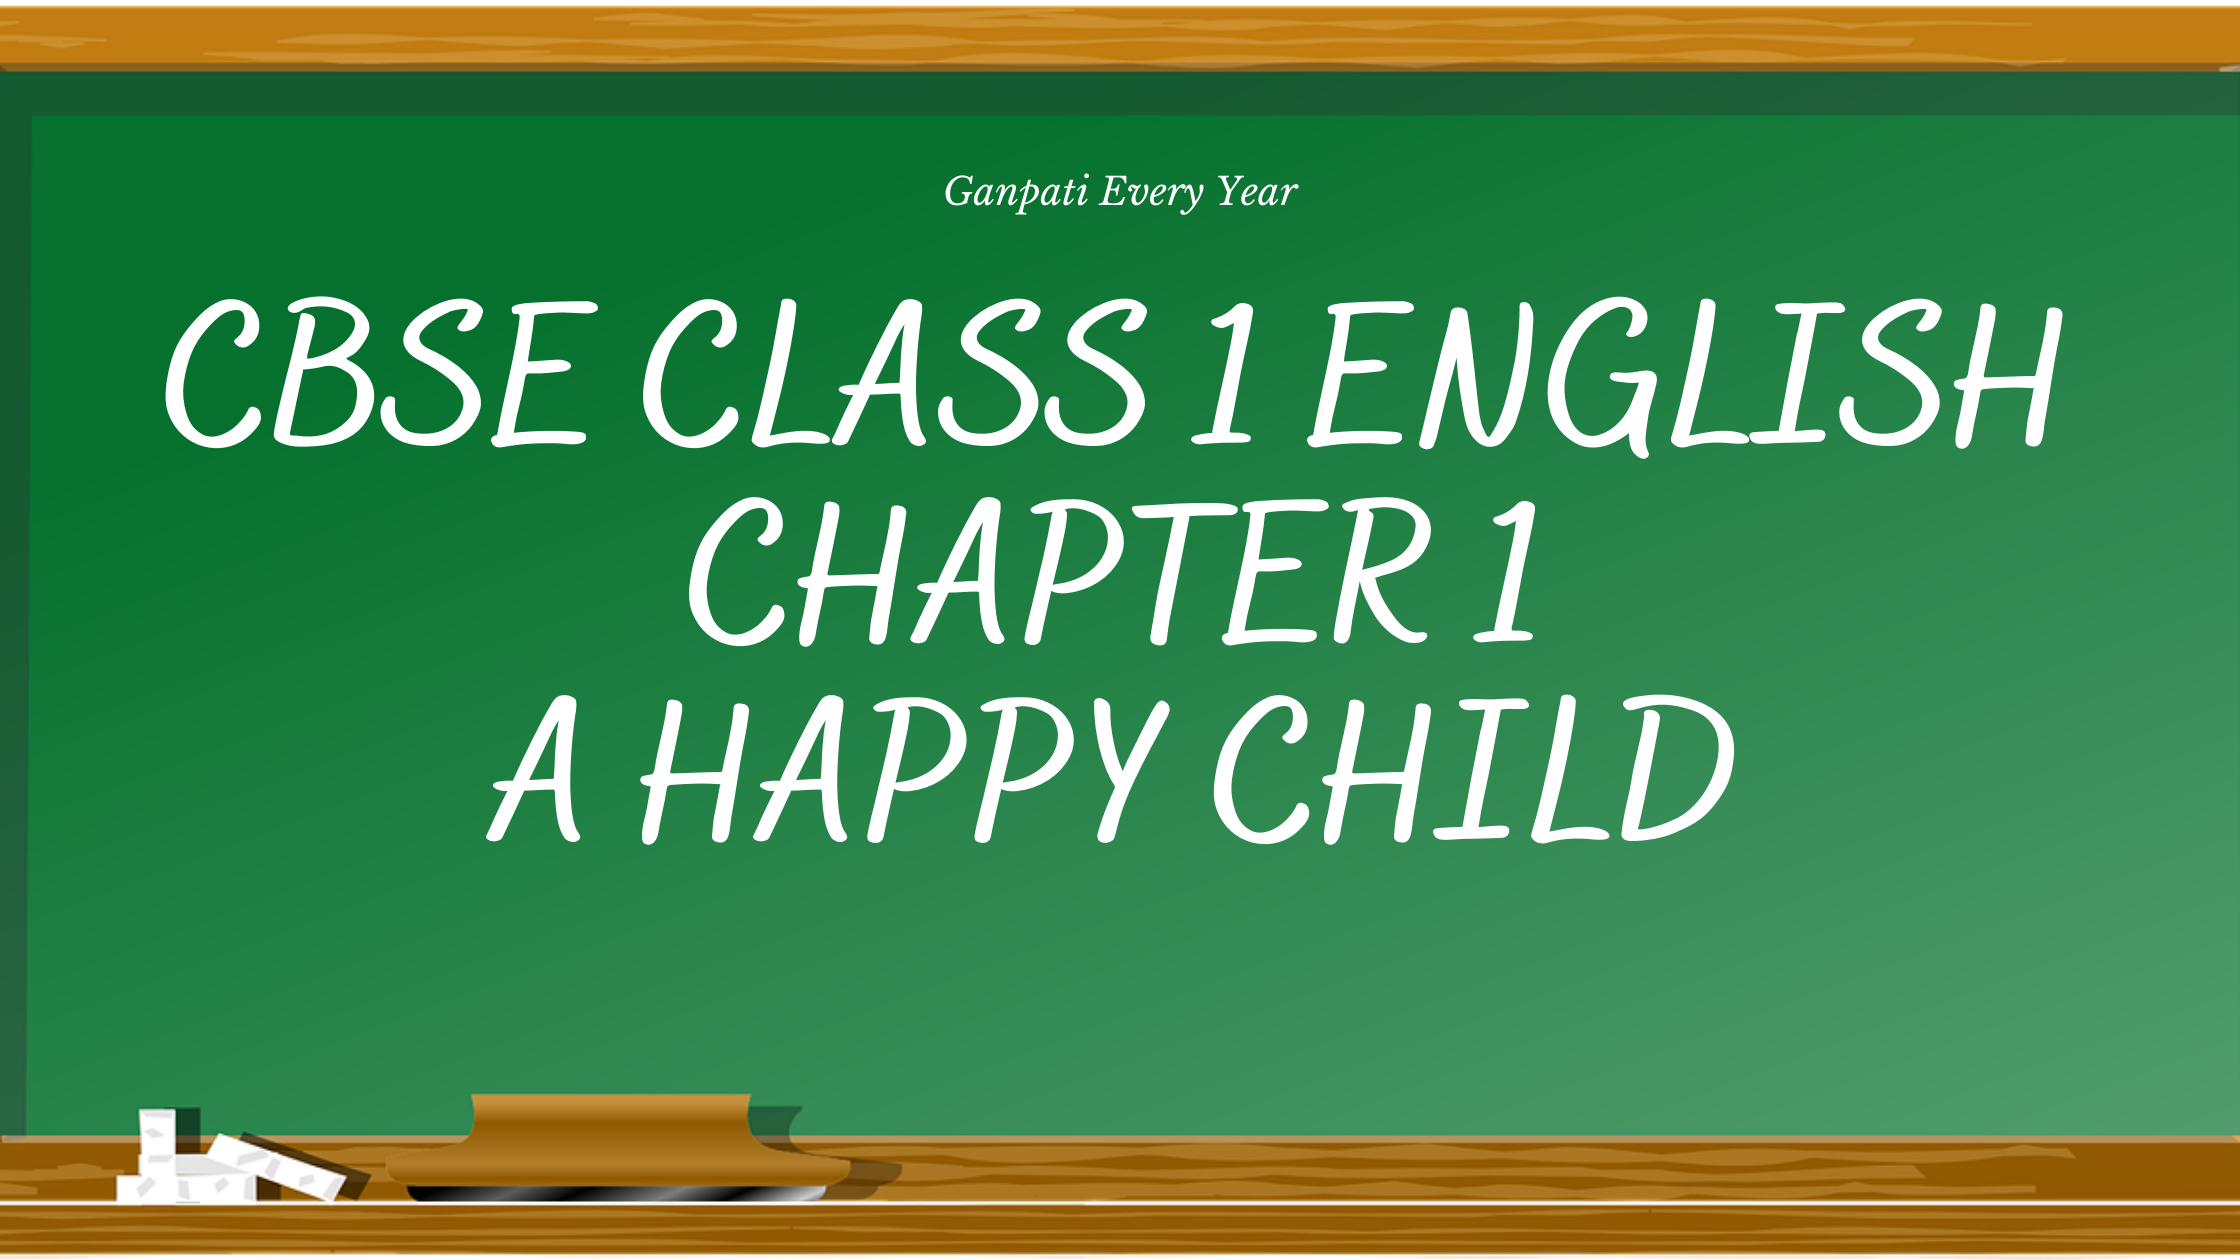 CBSE Class 1 English Chapter 1